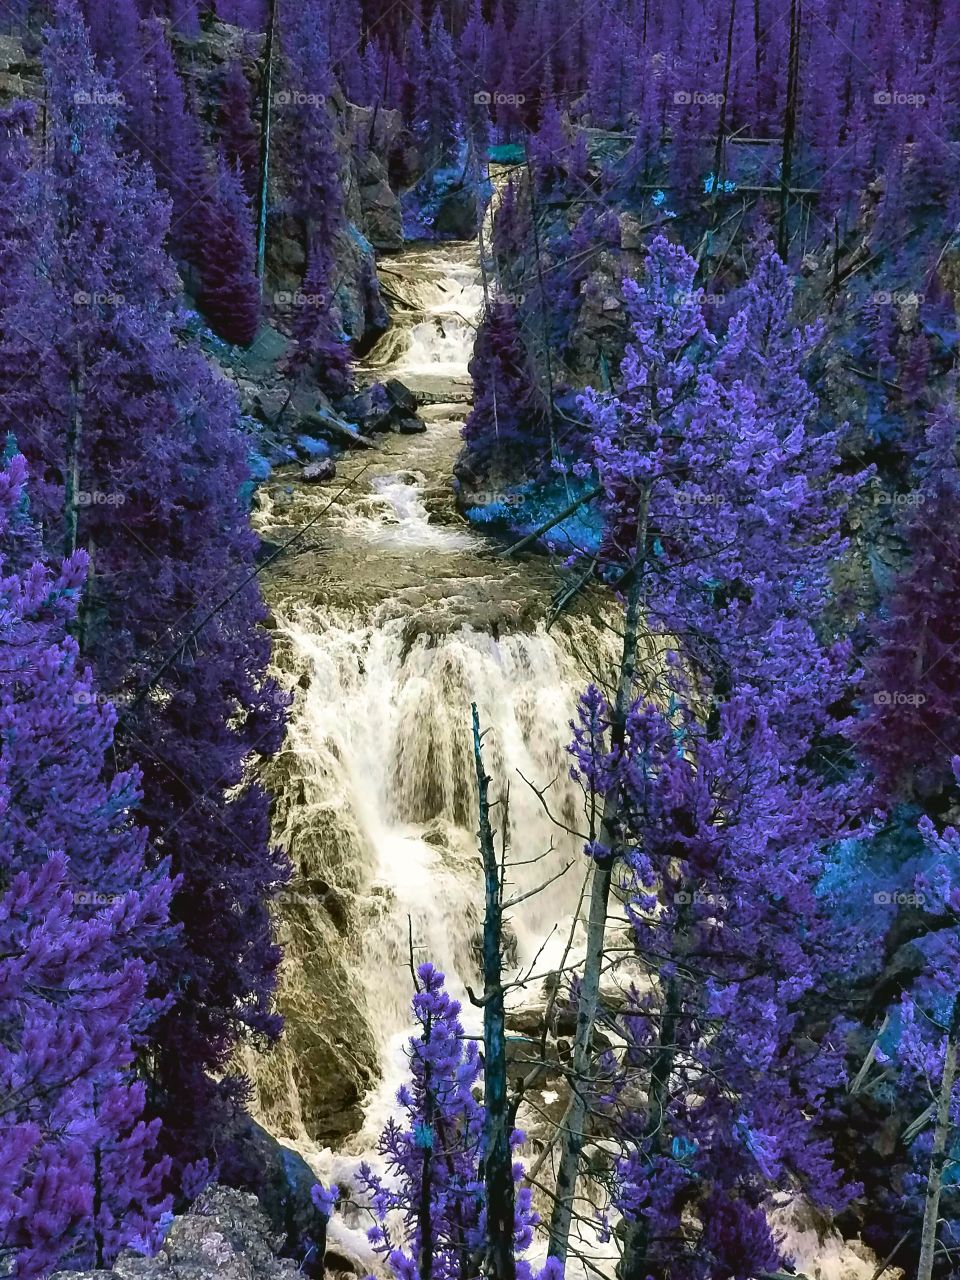 Yellowstones waterfalls in winter